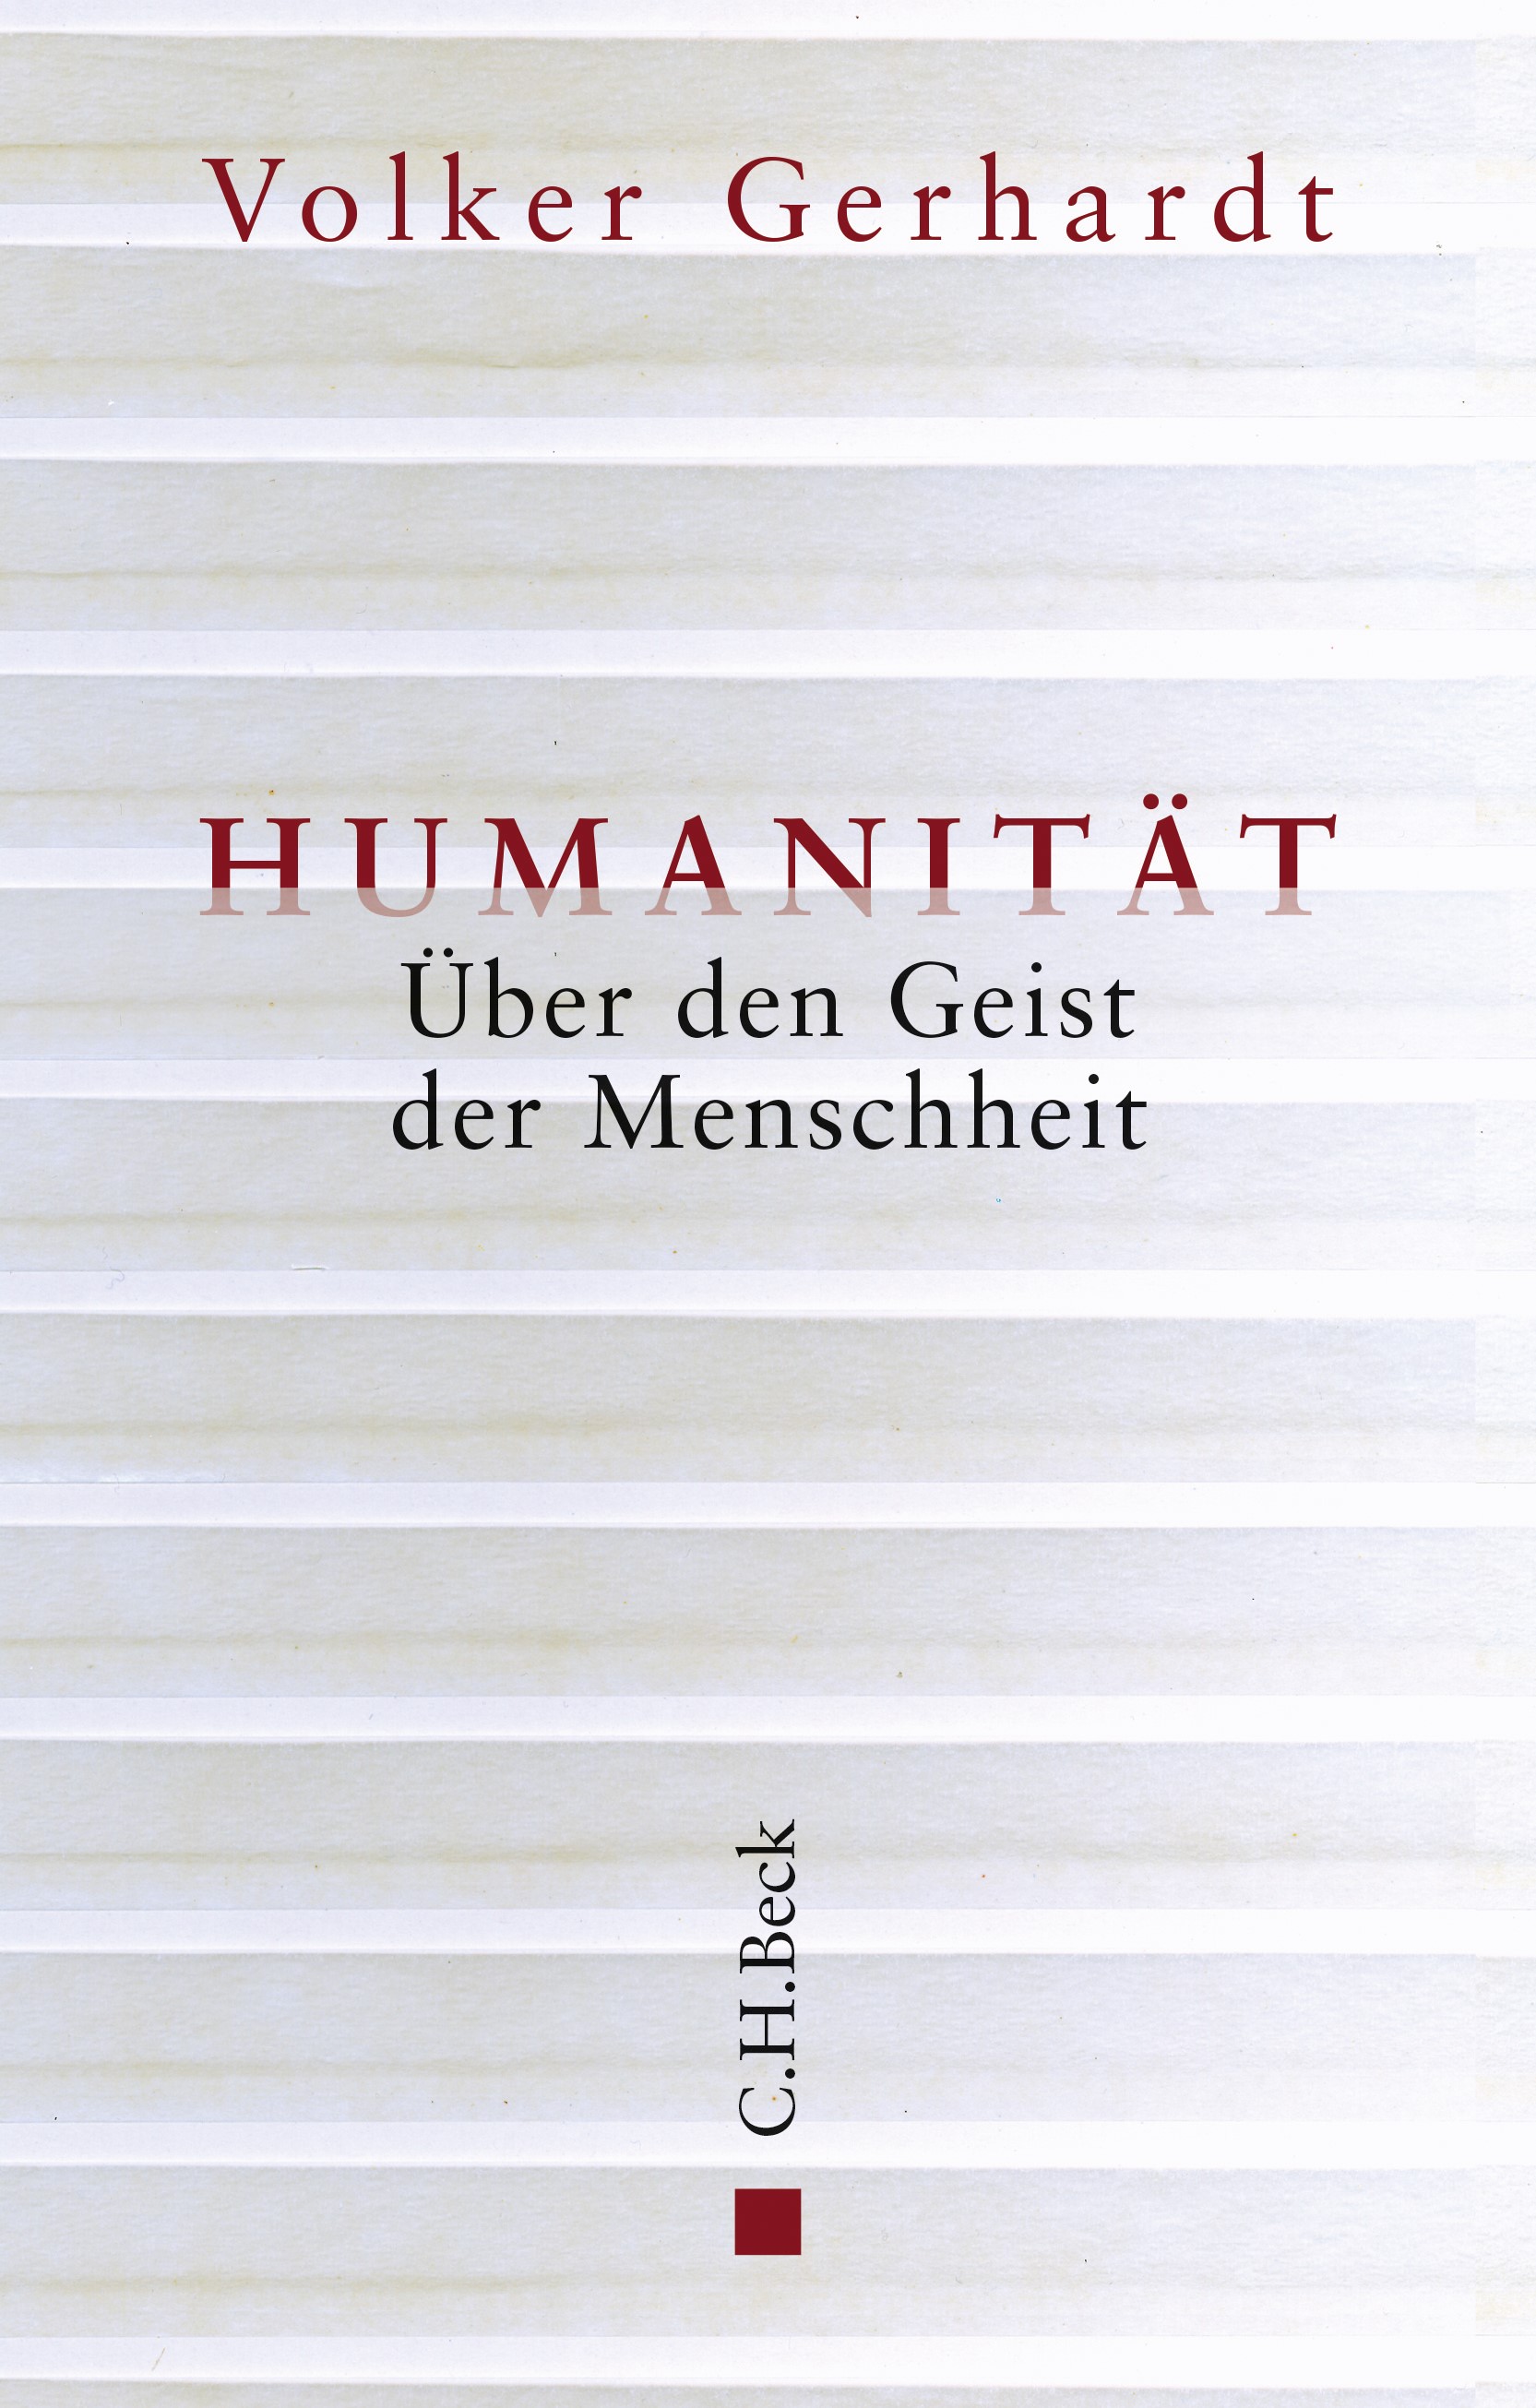 cover Gerhardt Humanitat